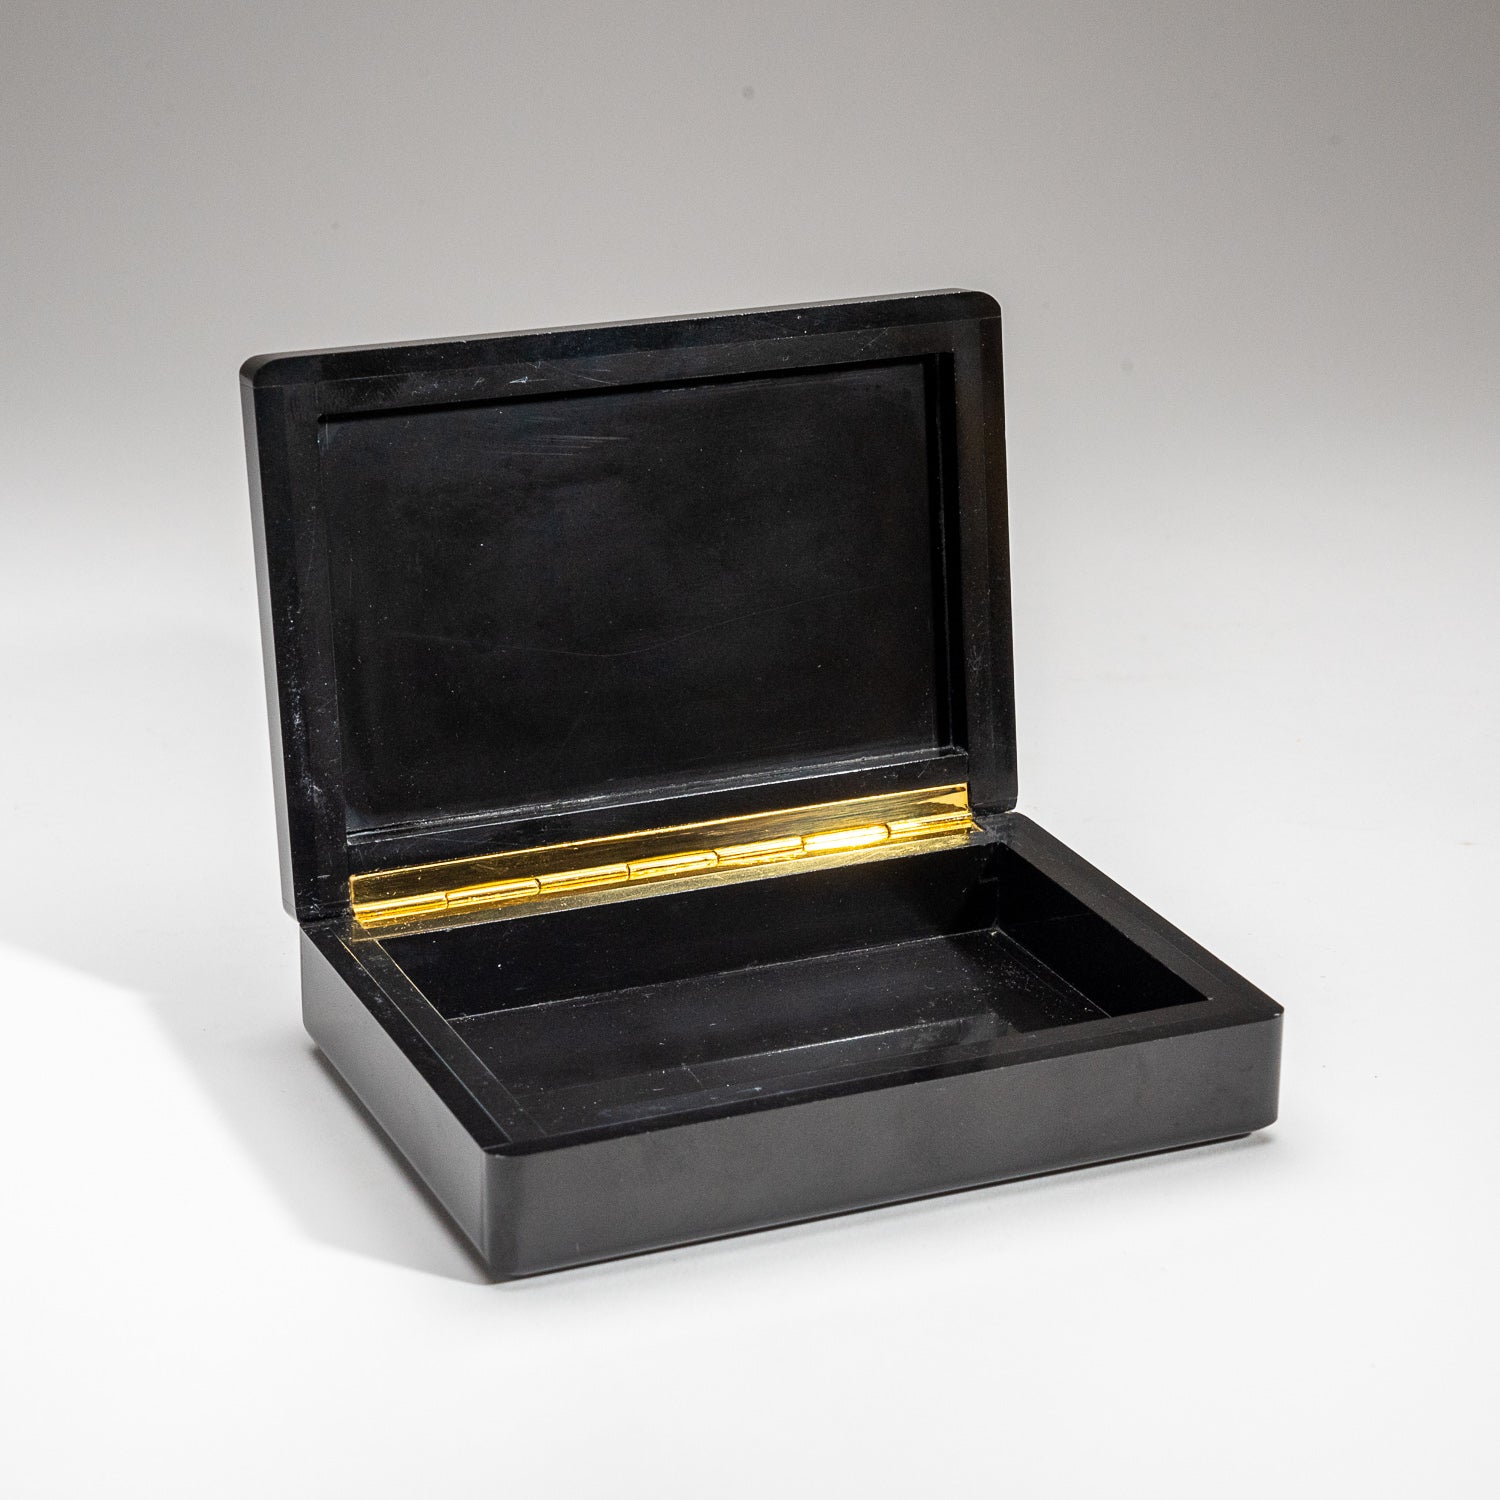 Genuine Black Onyx with Ammonite Jewelry box (1.5 lbs)